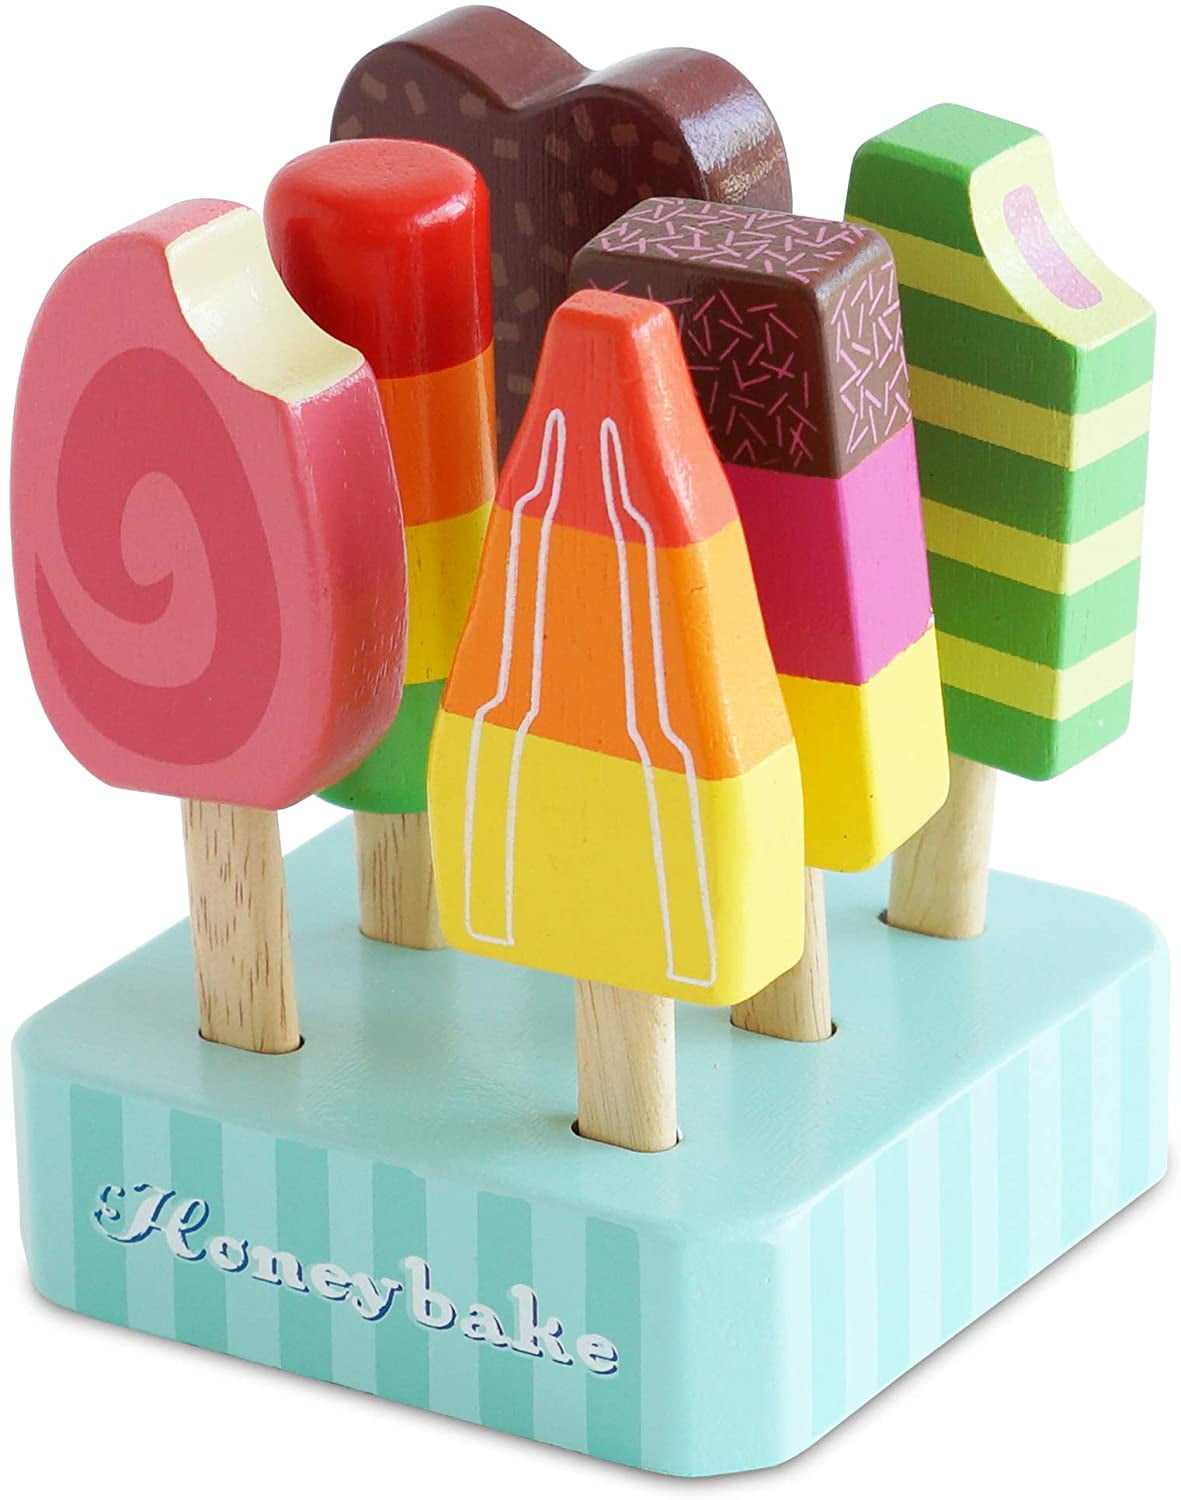 Le Toy Van HONEYBAKE PLAY ICE CREAM SET Wooden Toy BN 